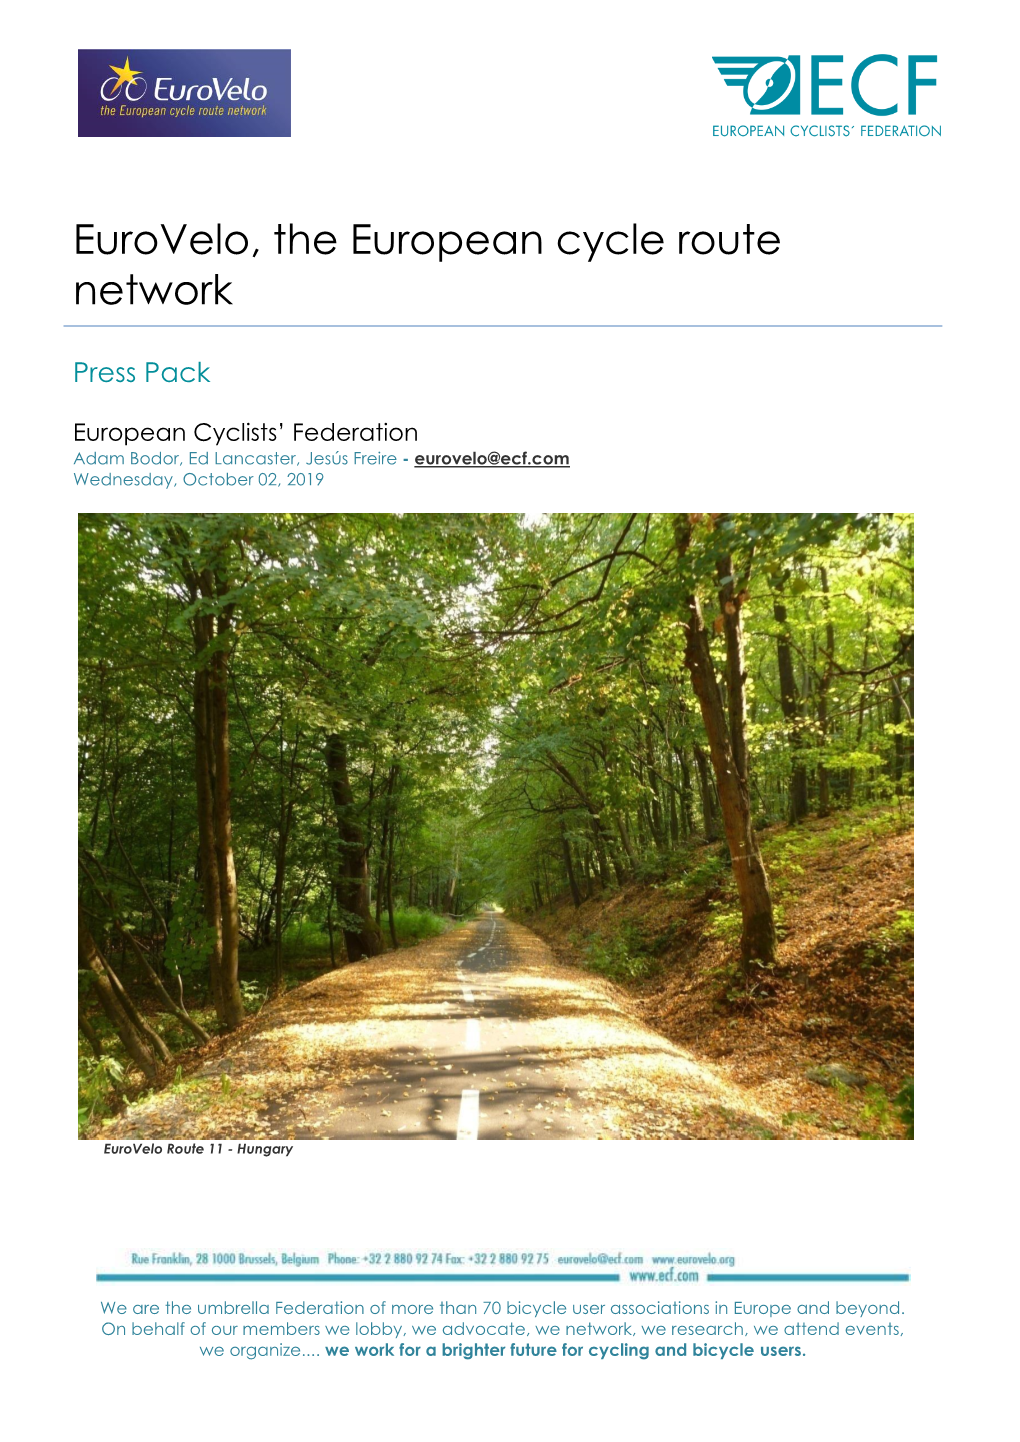 Eurovelo, the European Cycle Route Network